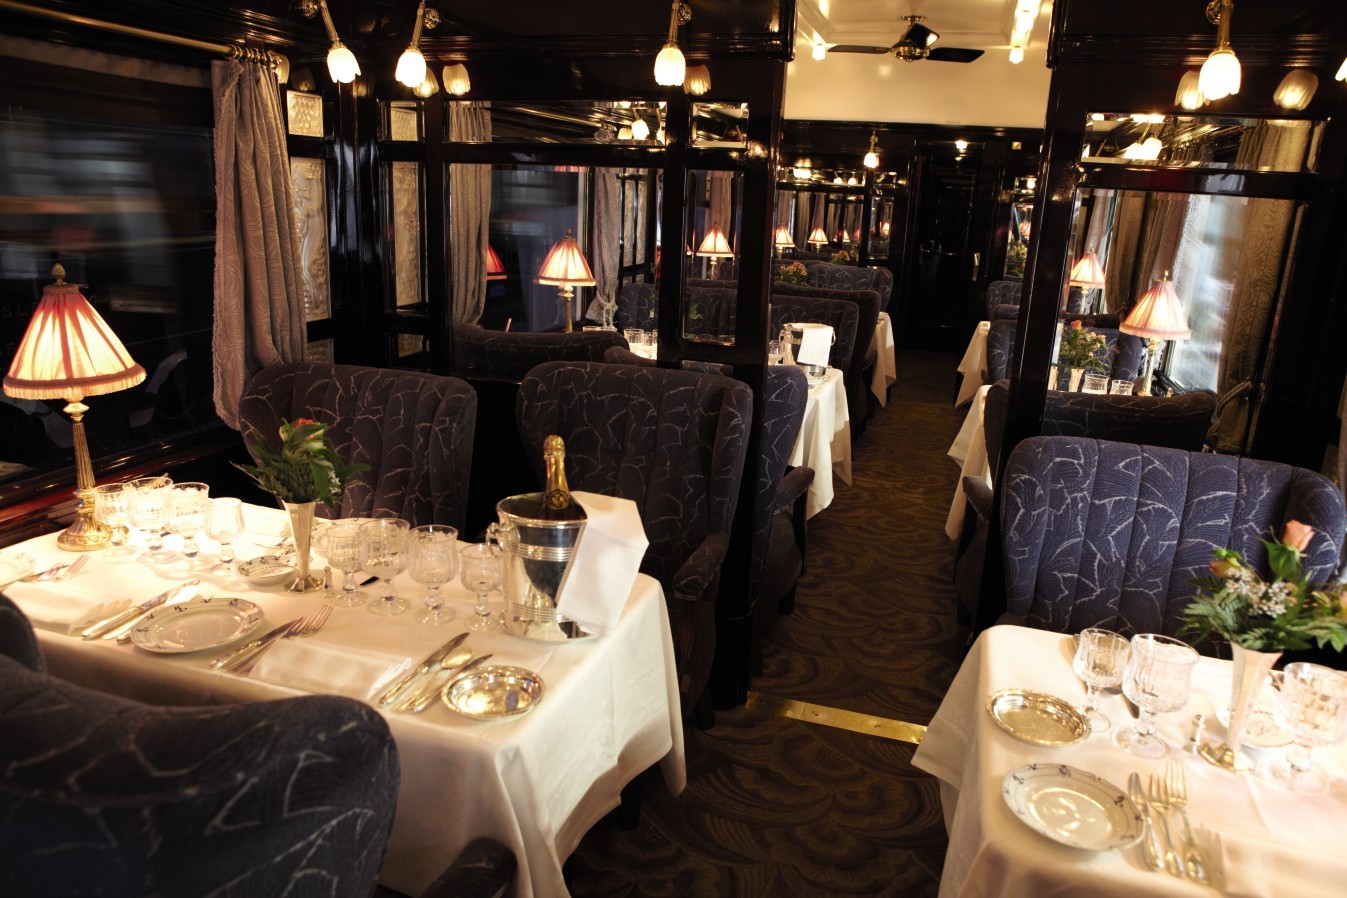 The Venice Simplon-Orient-Express restaurant car set for dinner service. Photo: Handout